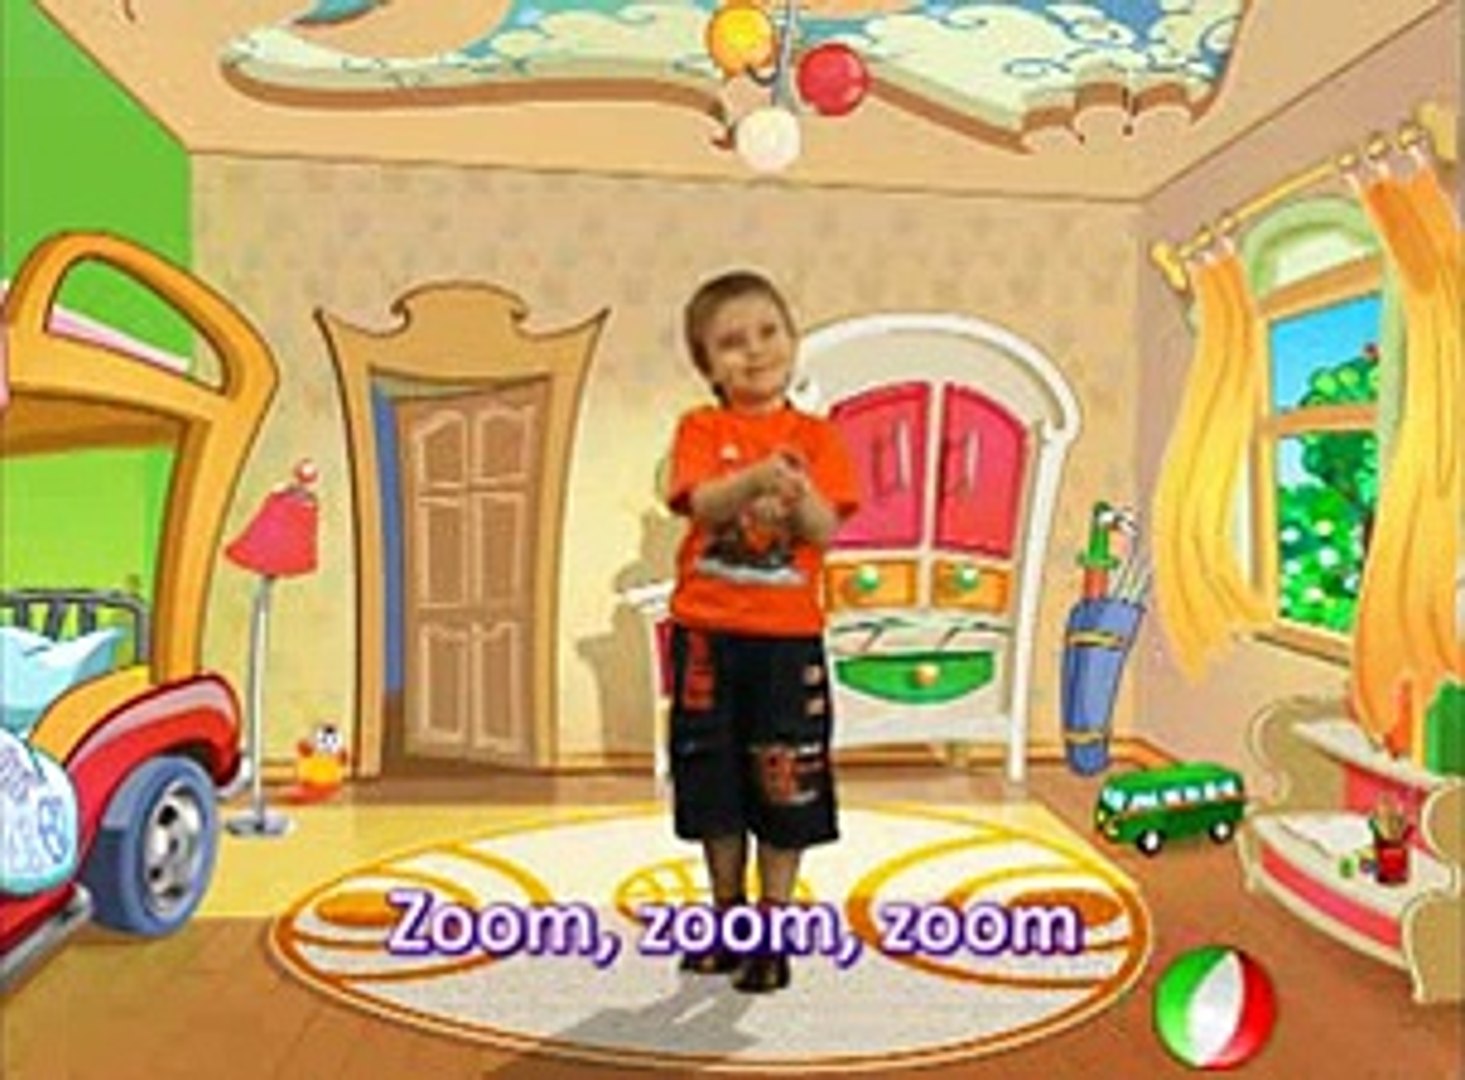 ⁣Zoom, zoom, zoom - English Nursery Rhymes Children Songs - Animation Rhymes